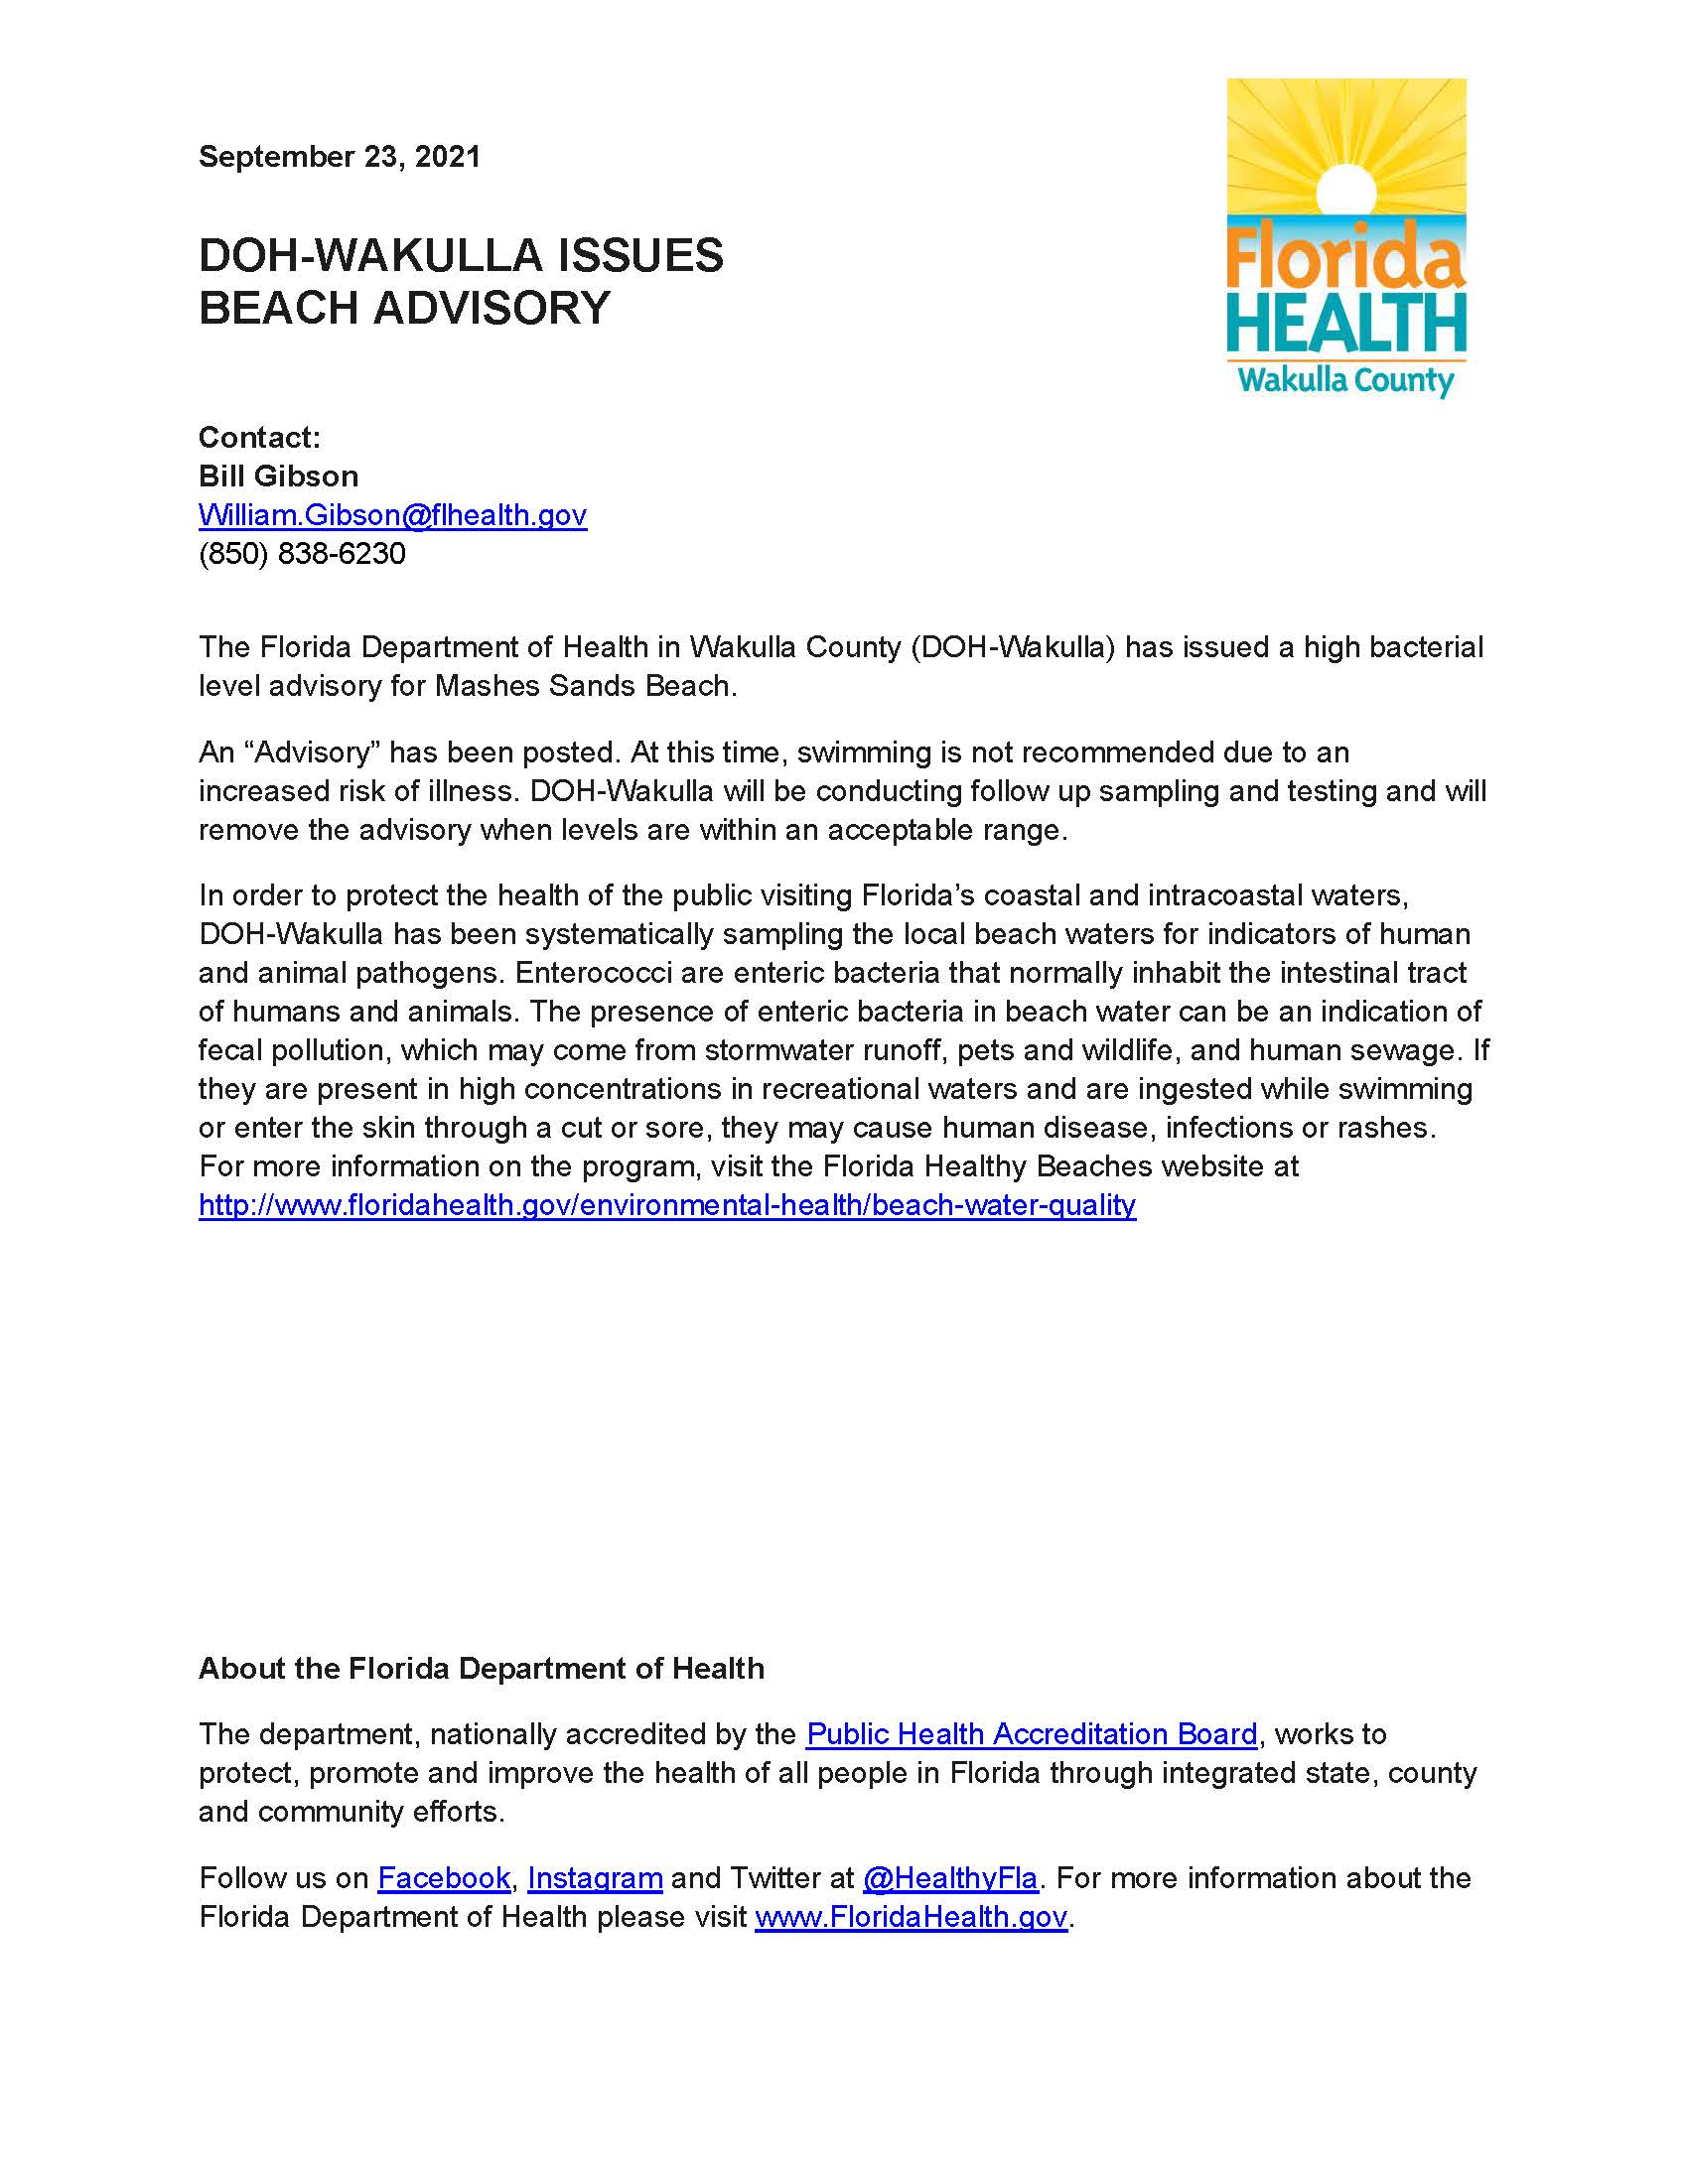 Mashes Sands Beach Advisory - 23Sep2021